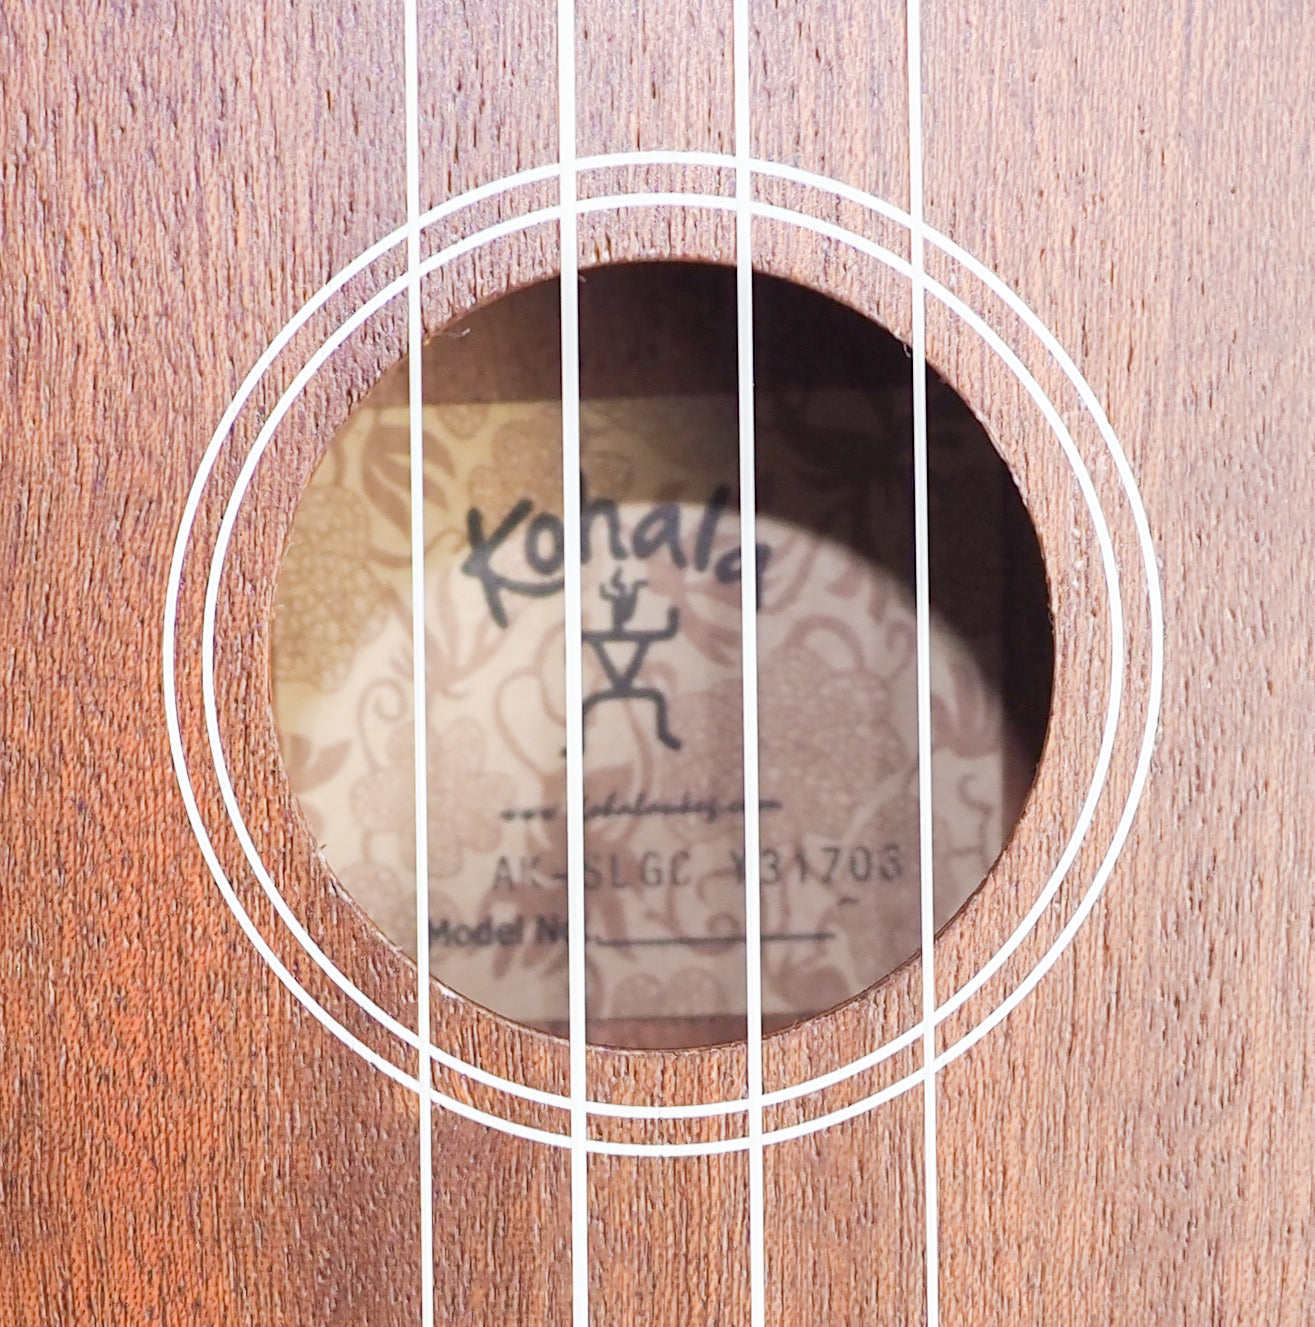 Kohala AK-SLGC Soprano ukulele with chord book, tunes up and plays in tune, nice sounding.